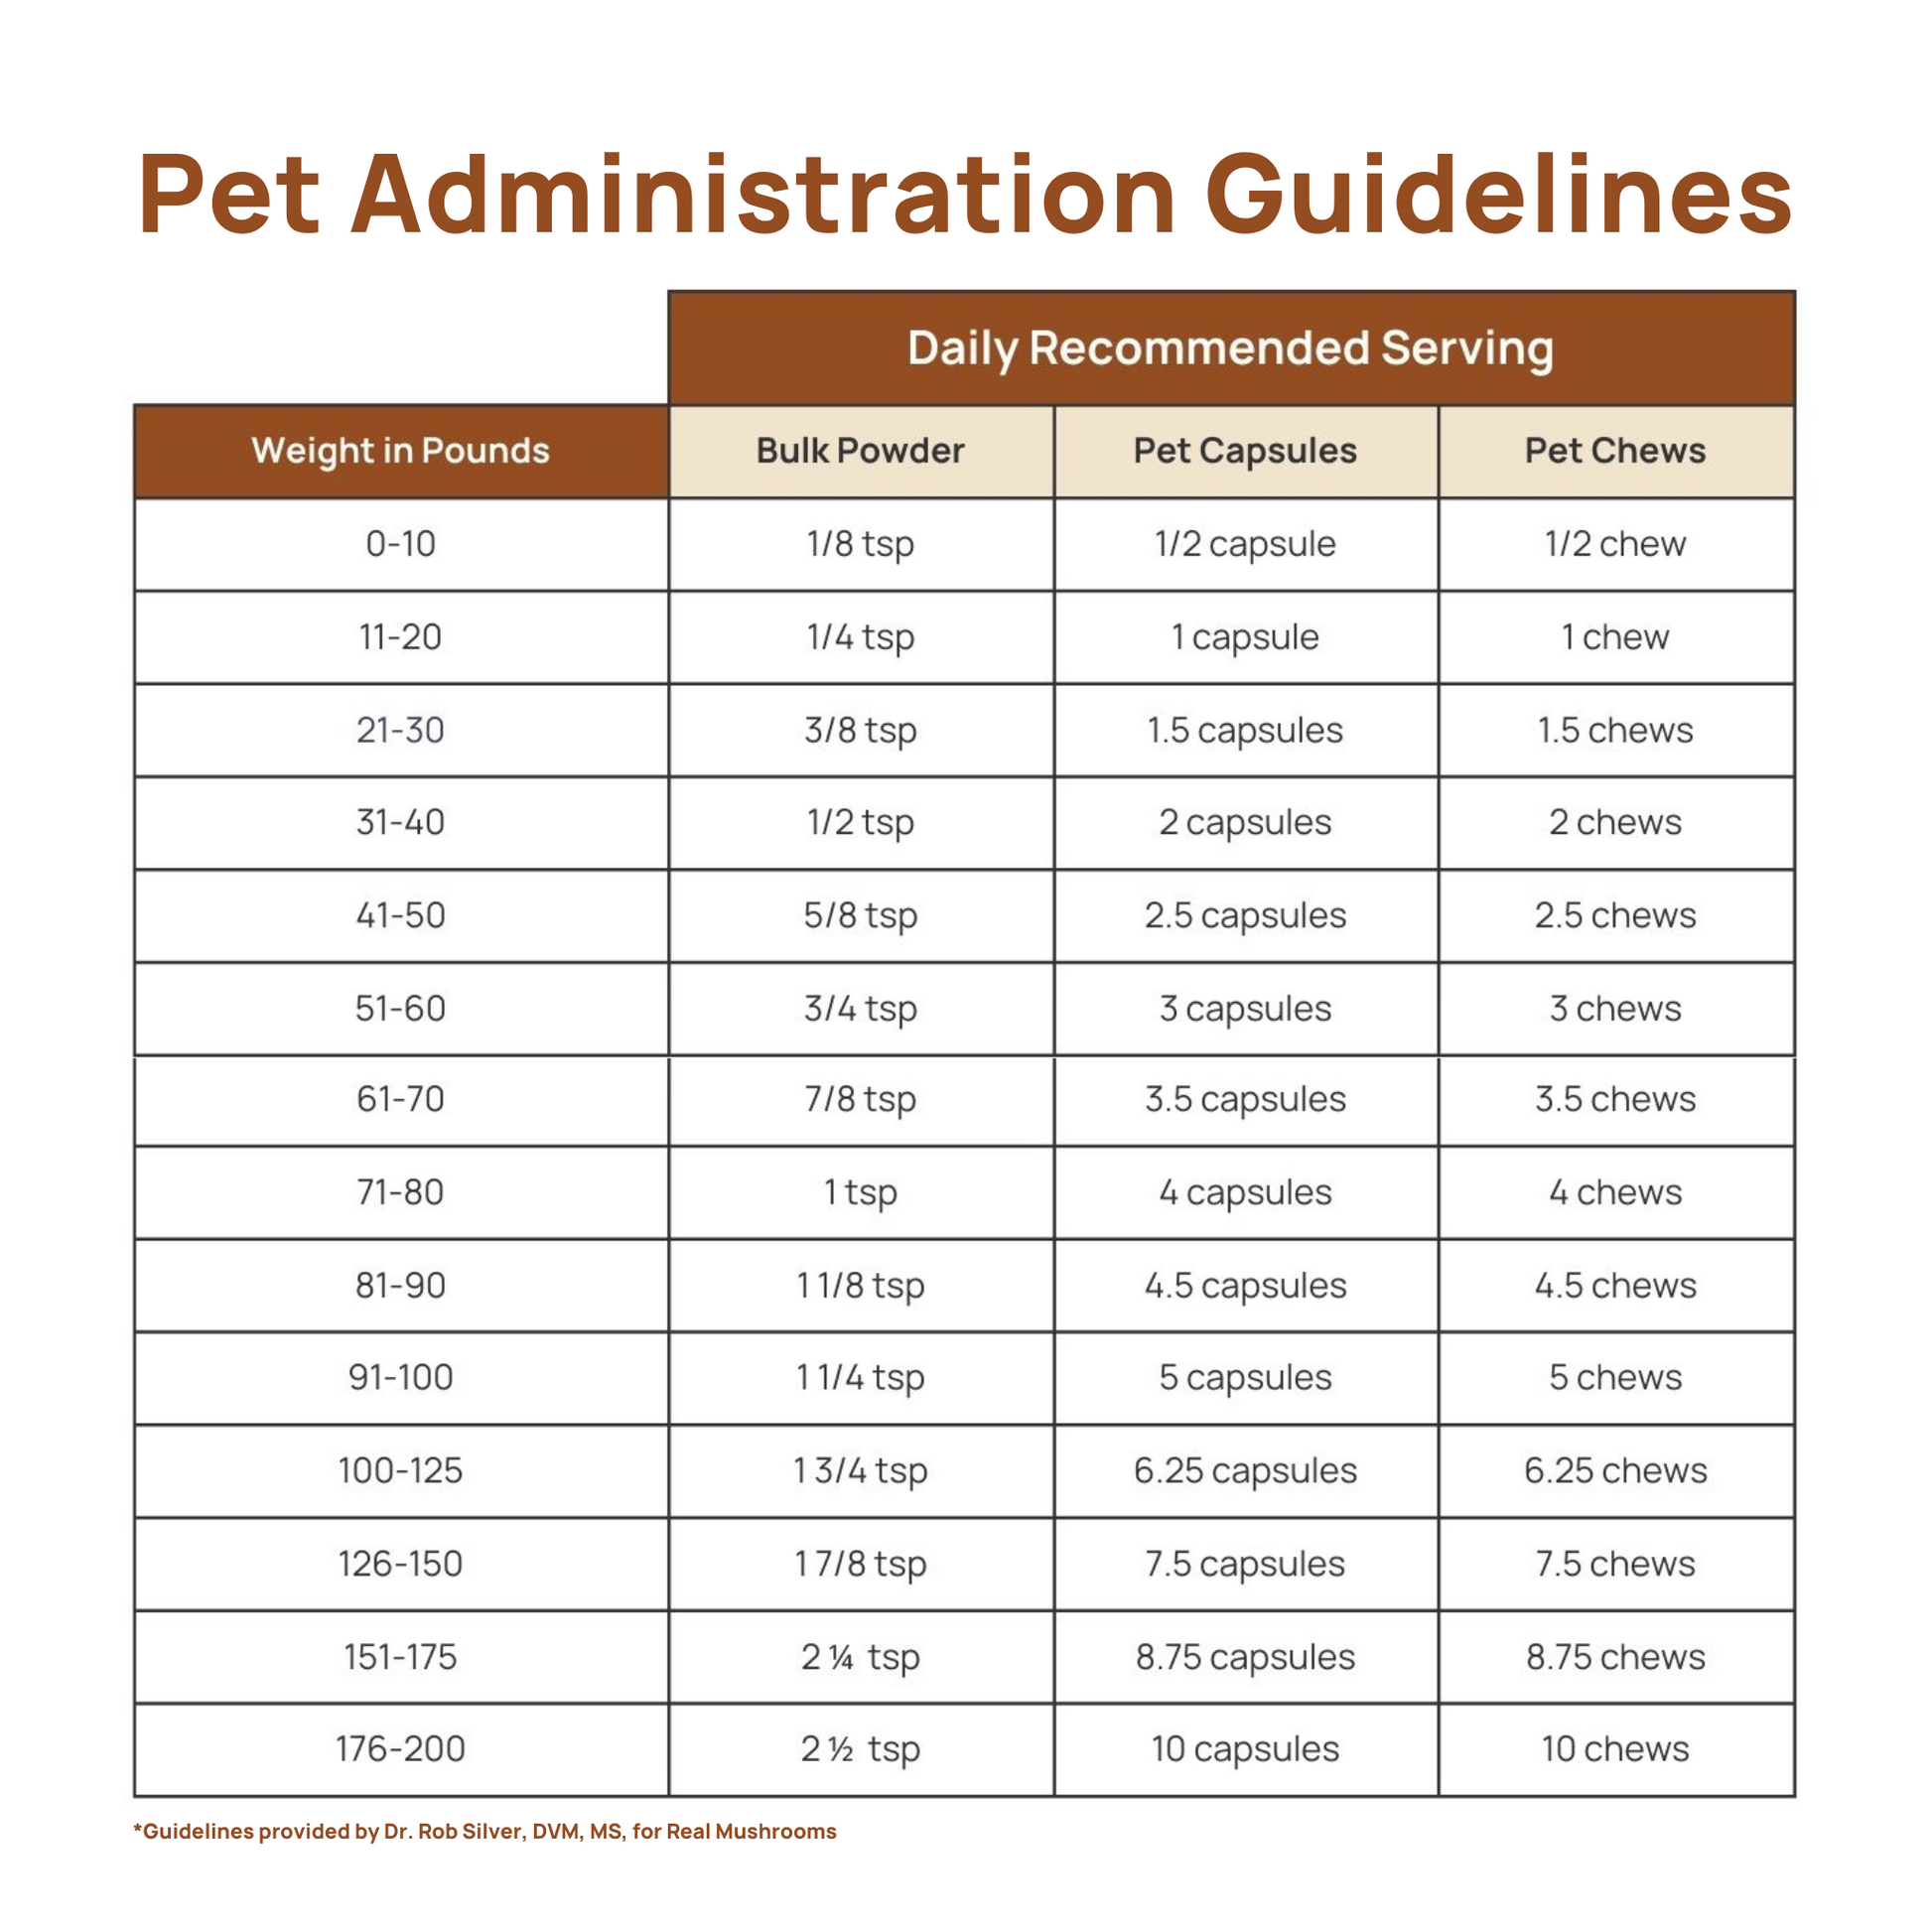 Real Mushrooms' Mushroom Immune Pet Chews for pet administration guidelines.